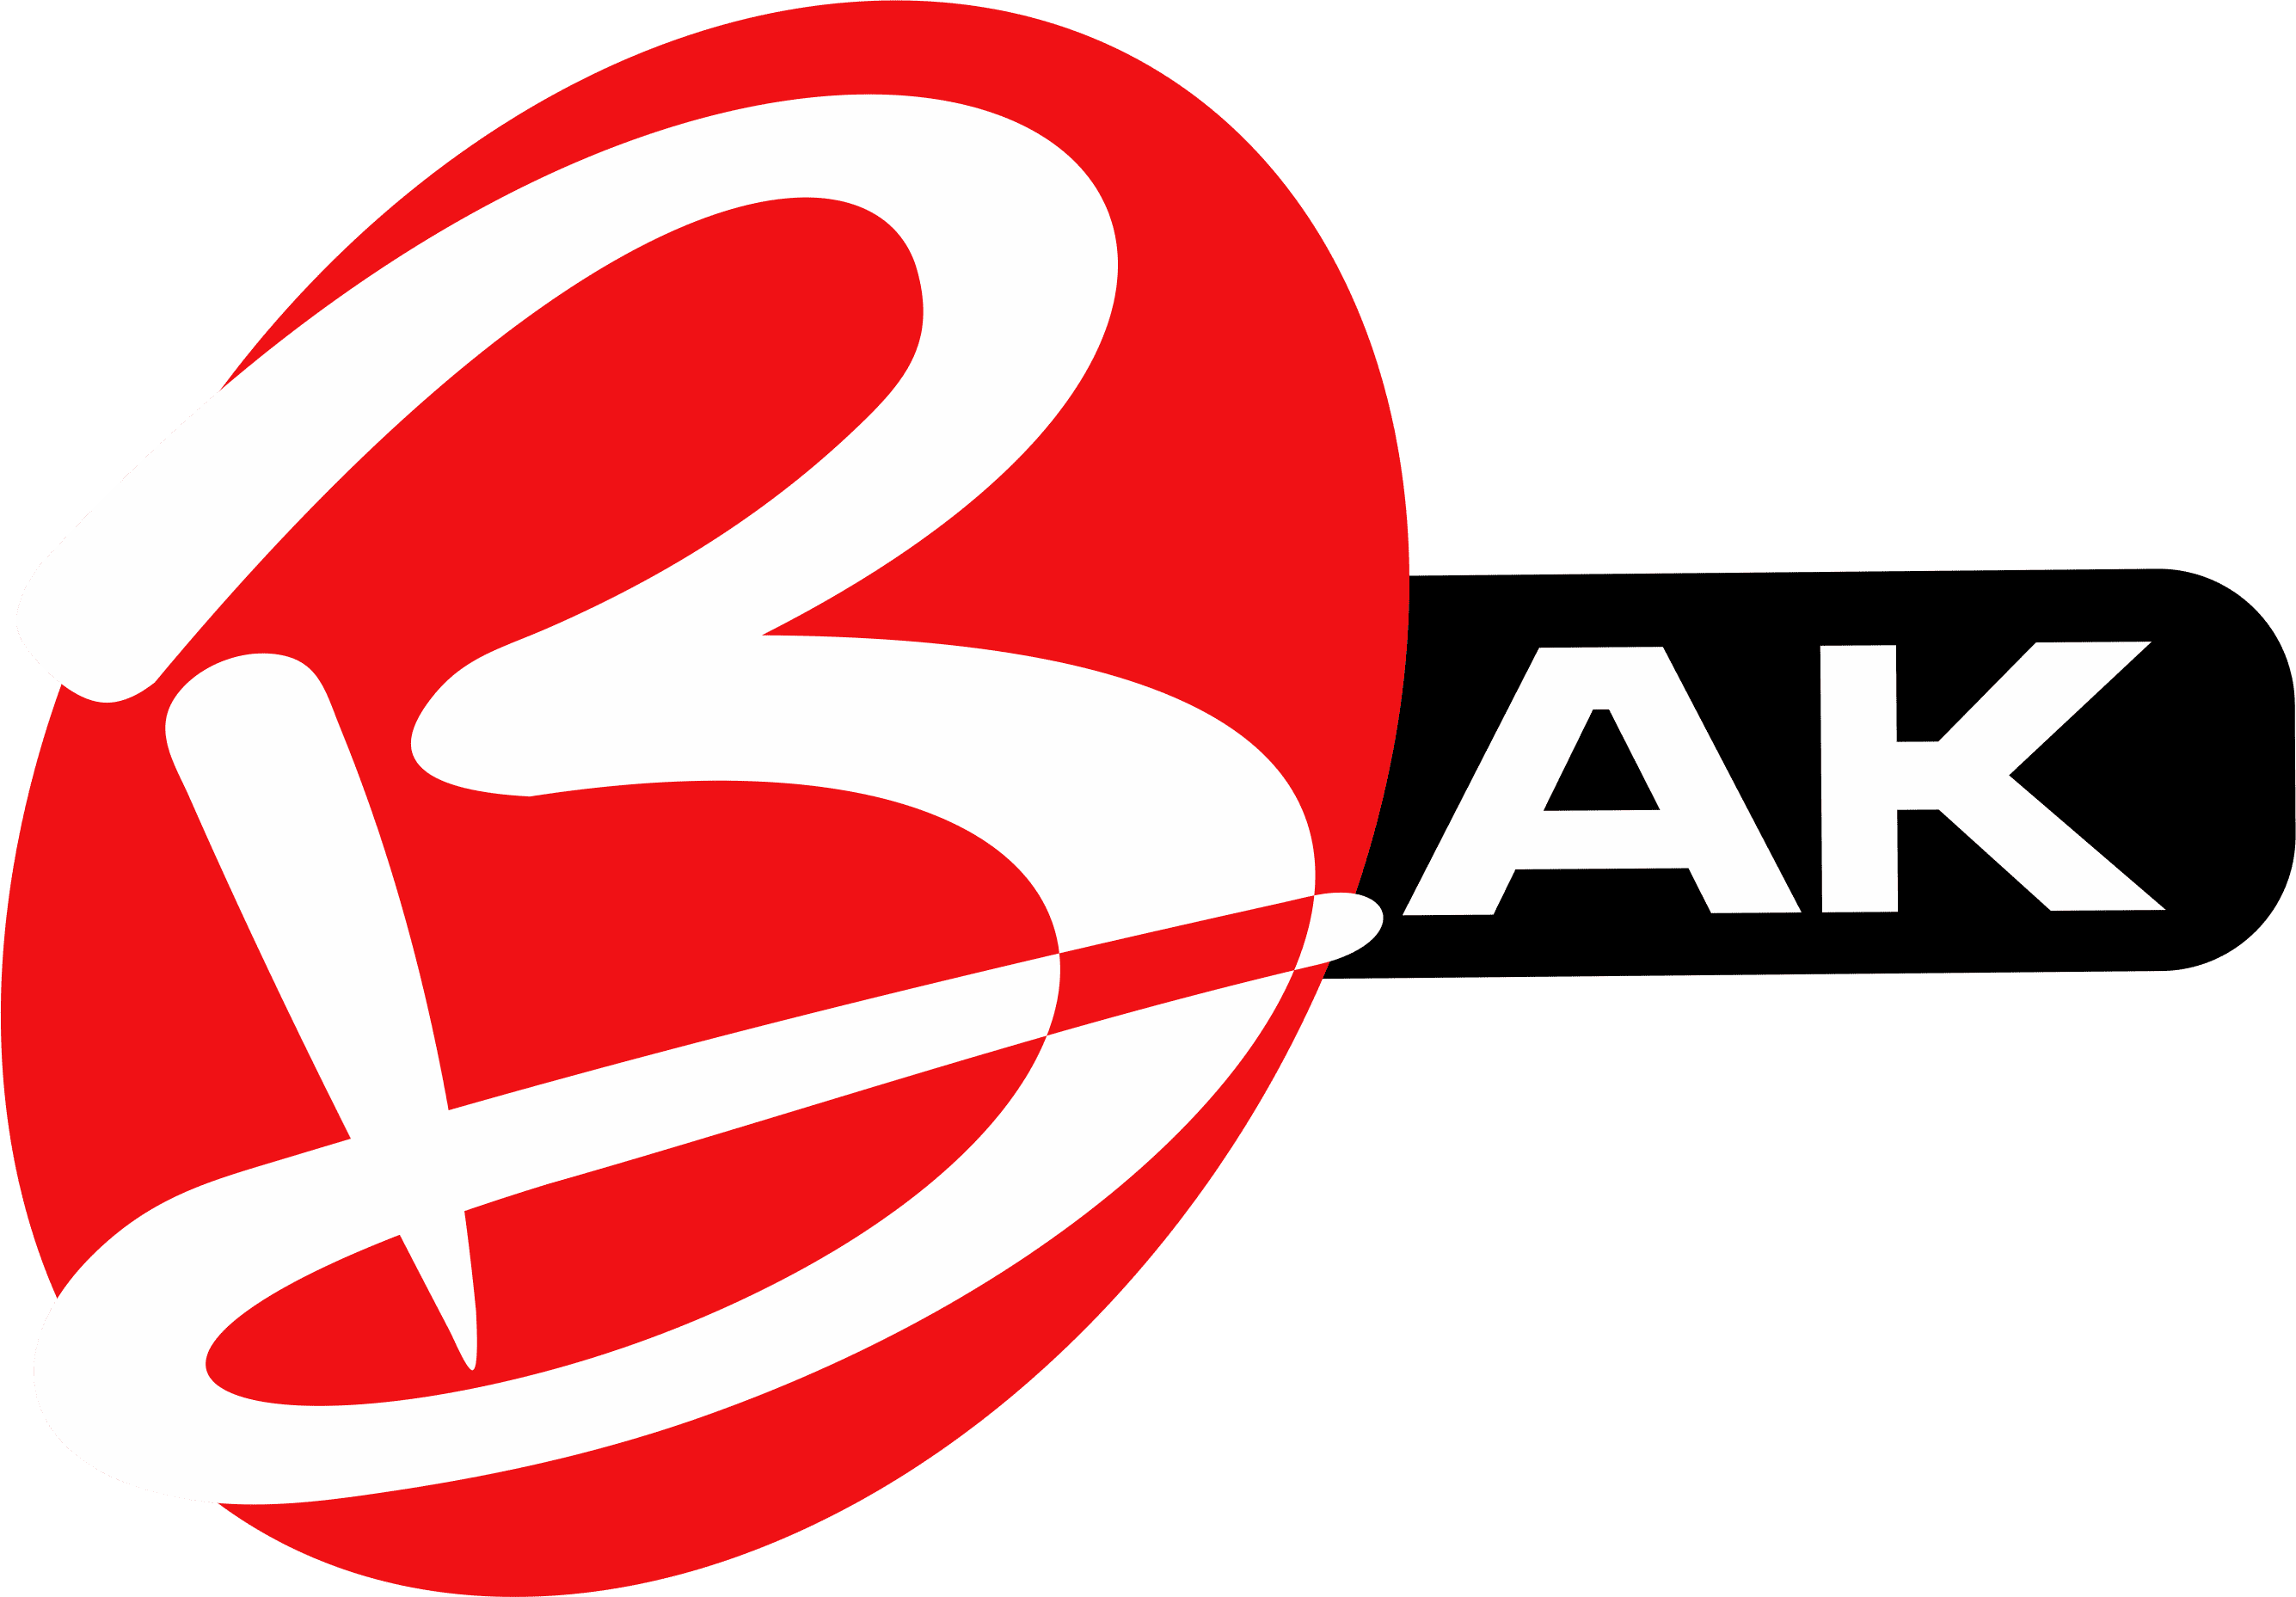 logo-bak-1